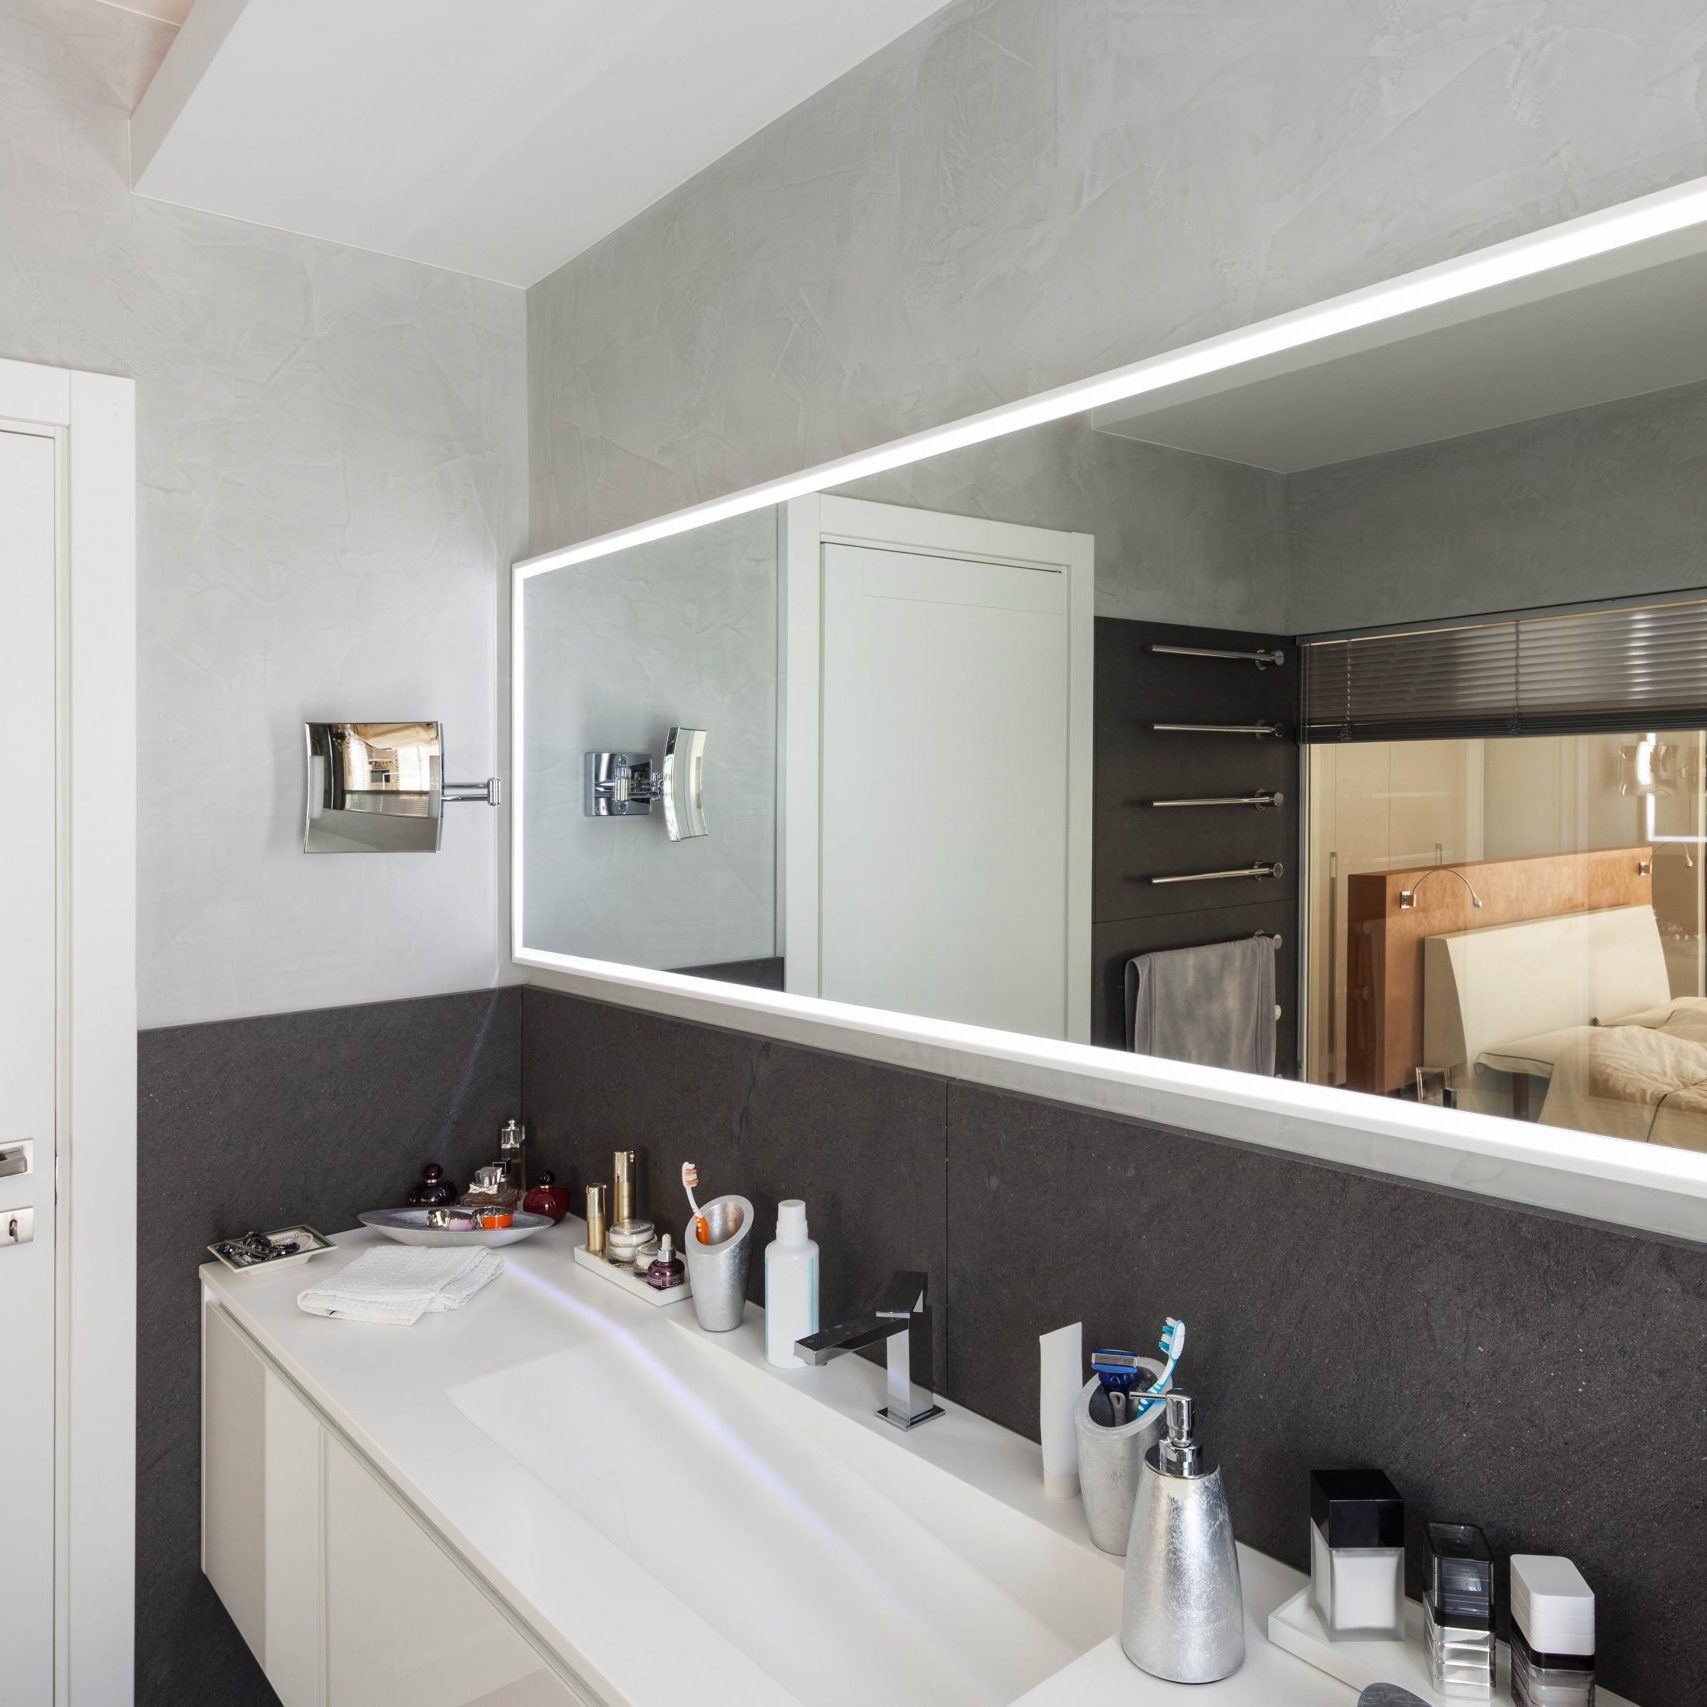 Lighted mirror for bathroom vanity